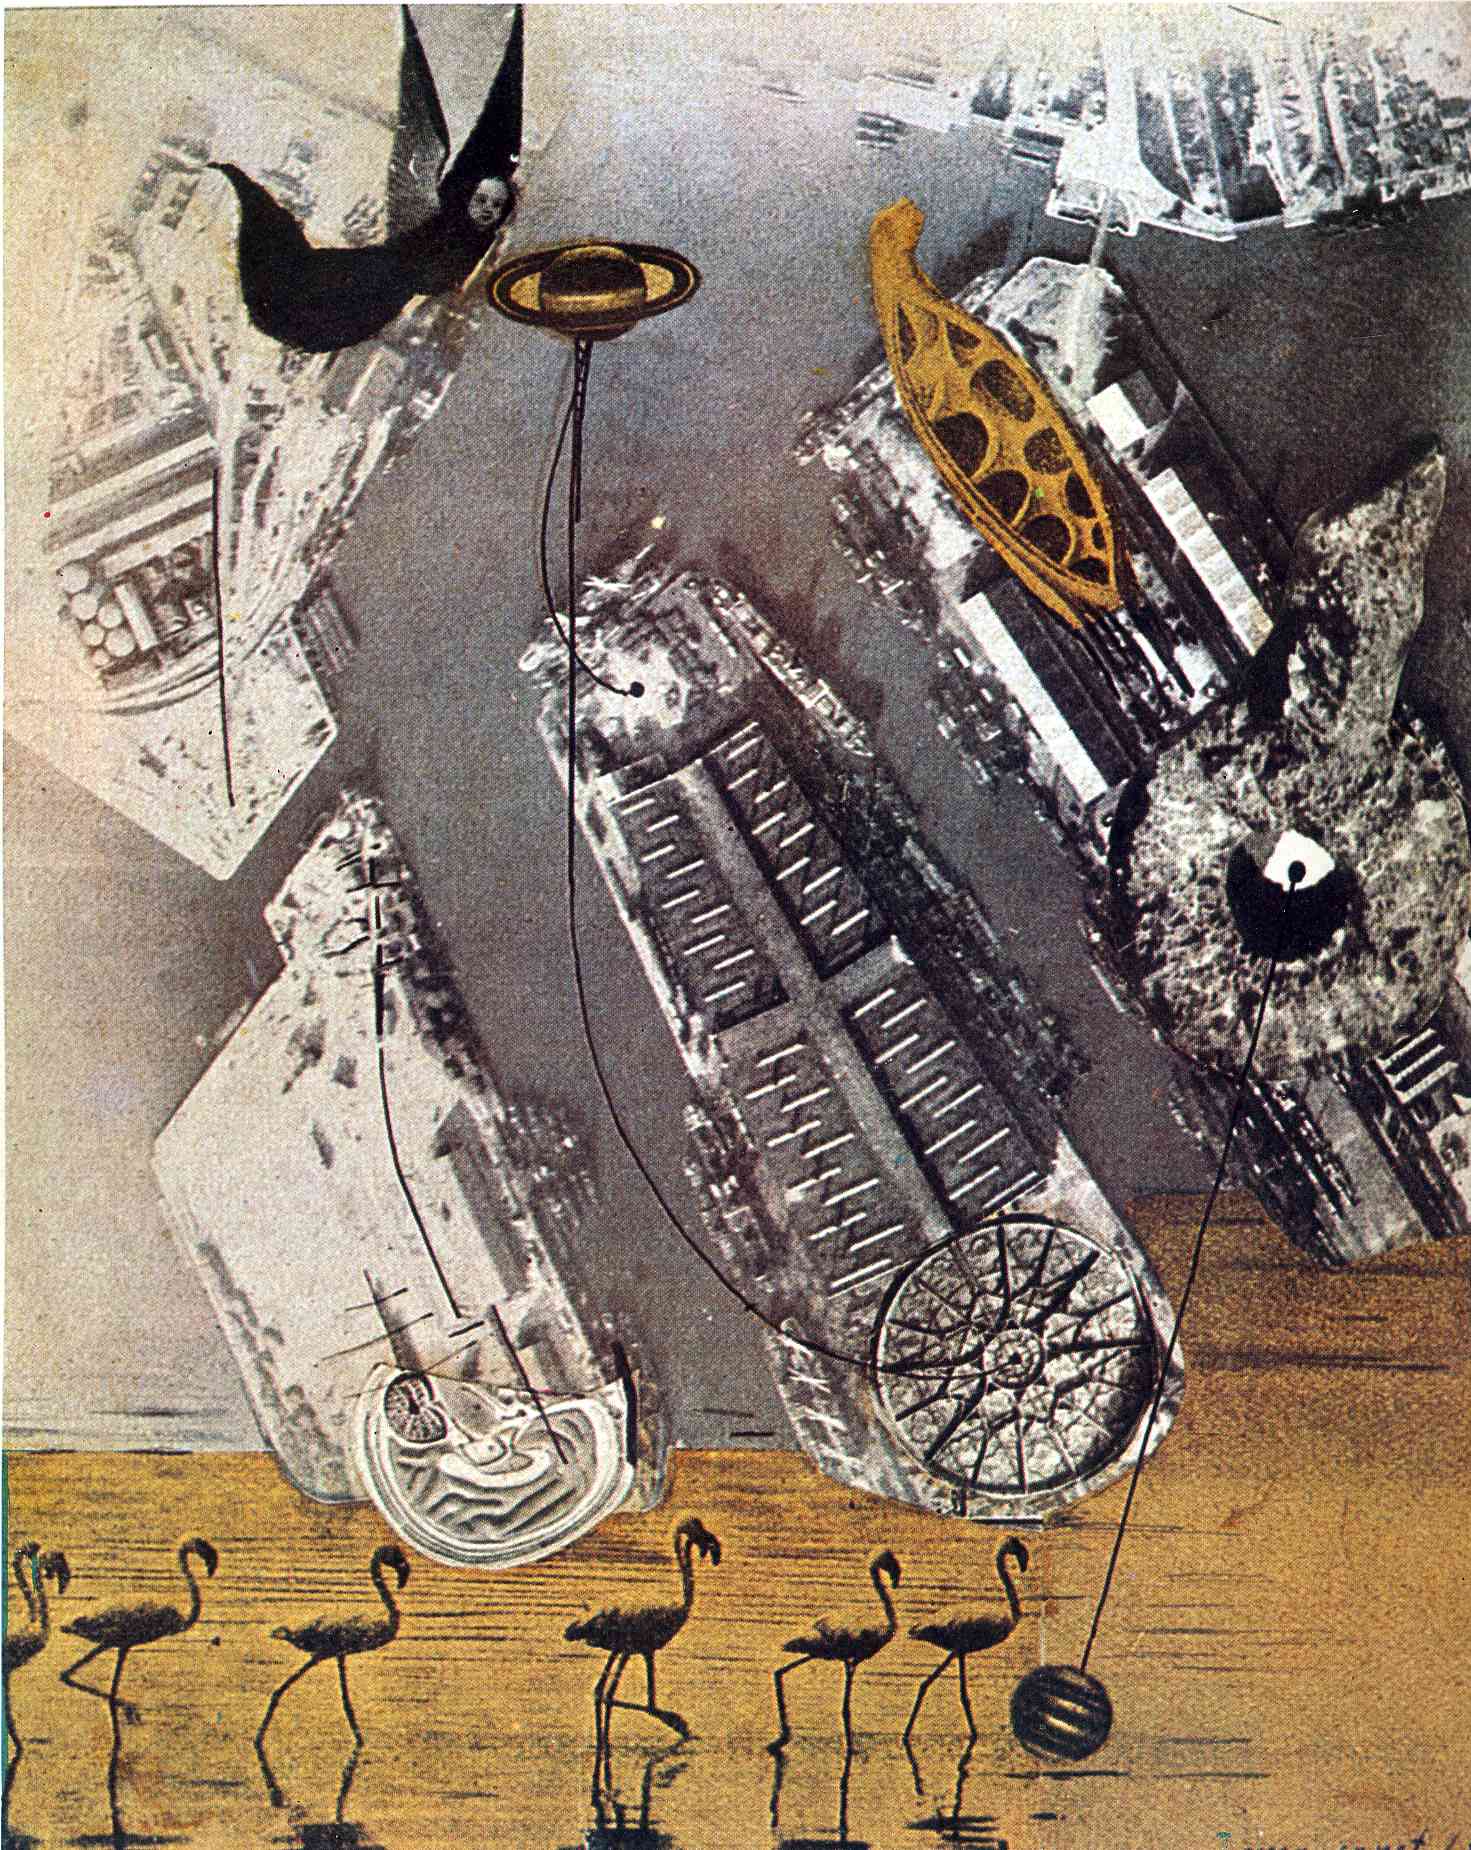 Cormorants - Max Ernst - WikiArt.org - encyclopedia of visual arts